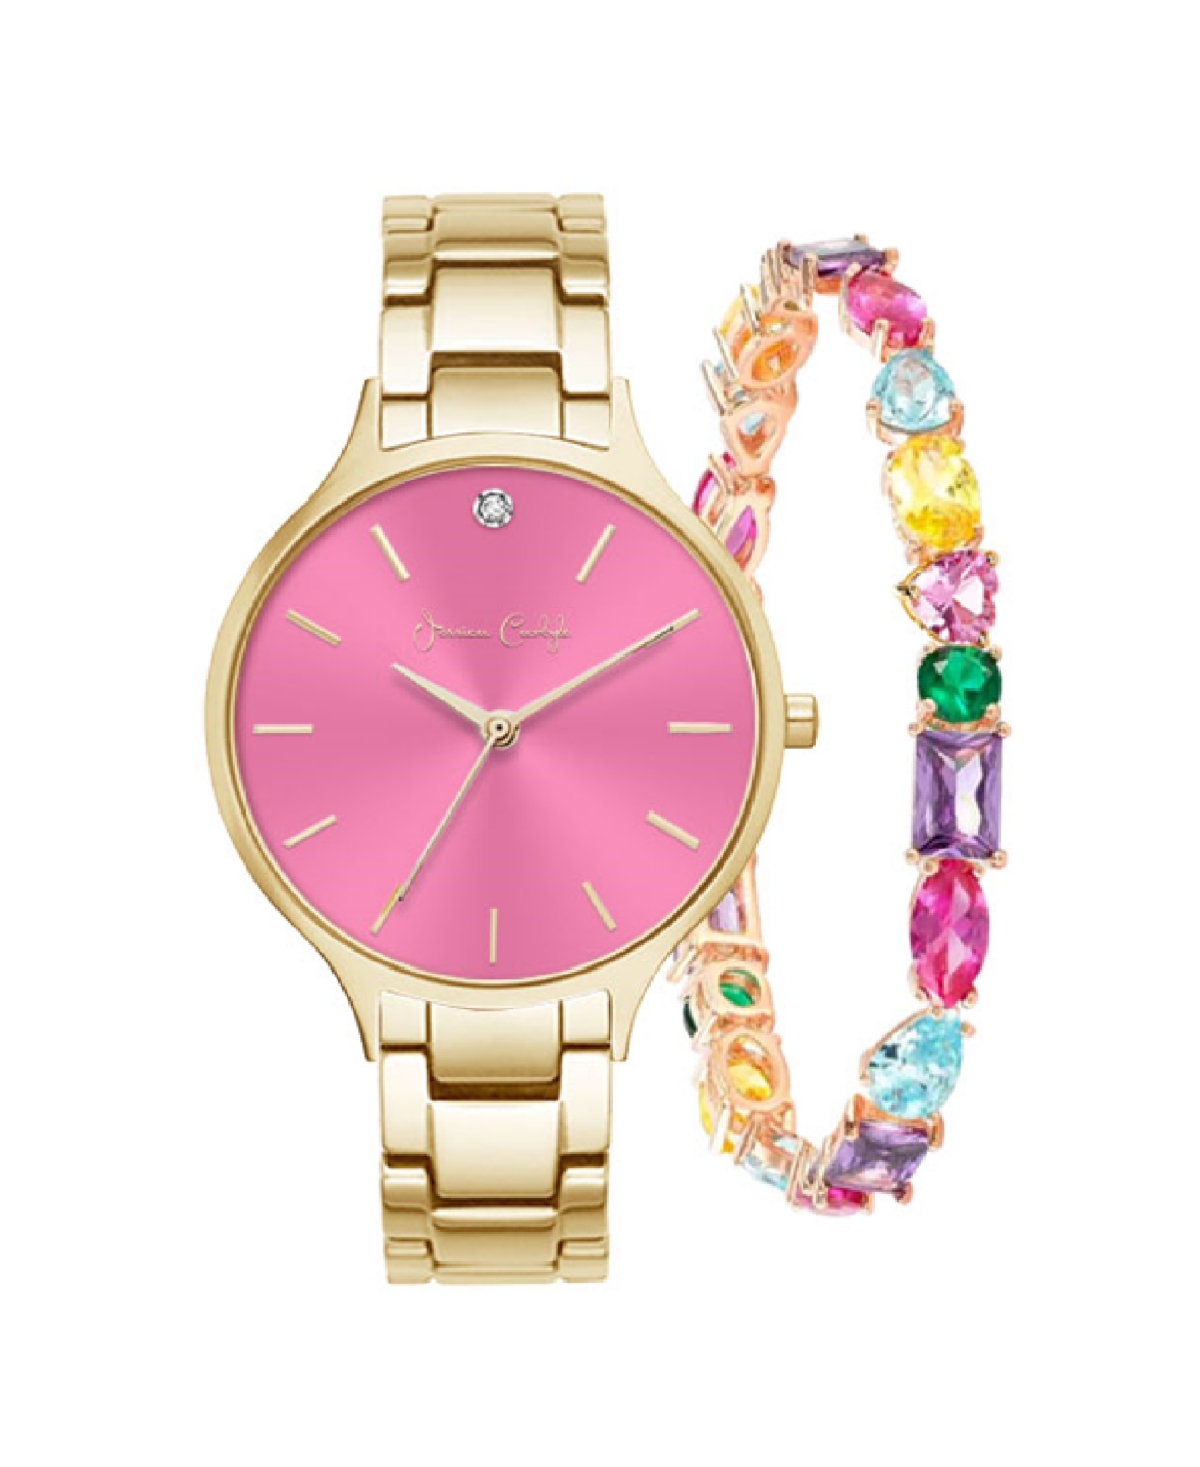 Women's Quartz Gold-Tone Alloy Bracelet Watch 36mm Gift Set - Shiny Gold, Pink Sunray